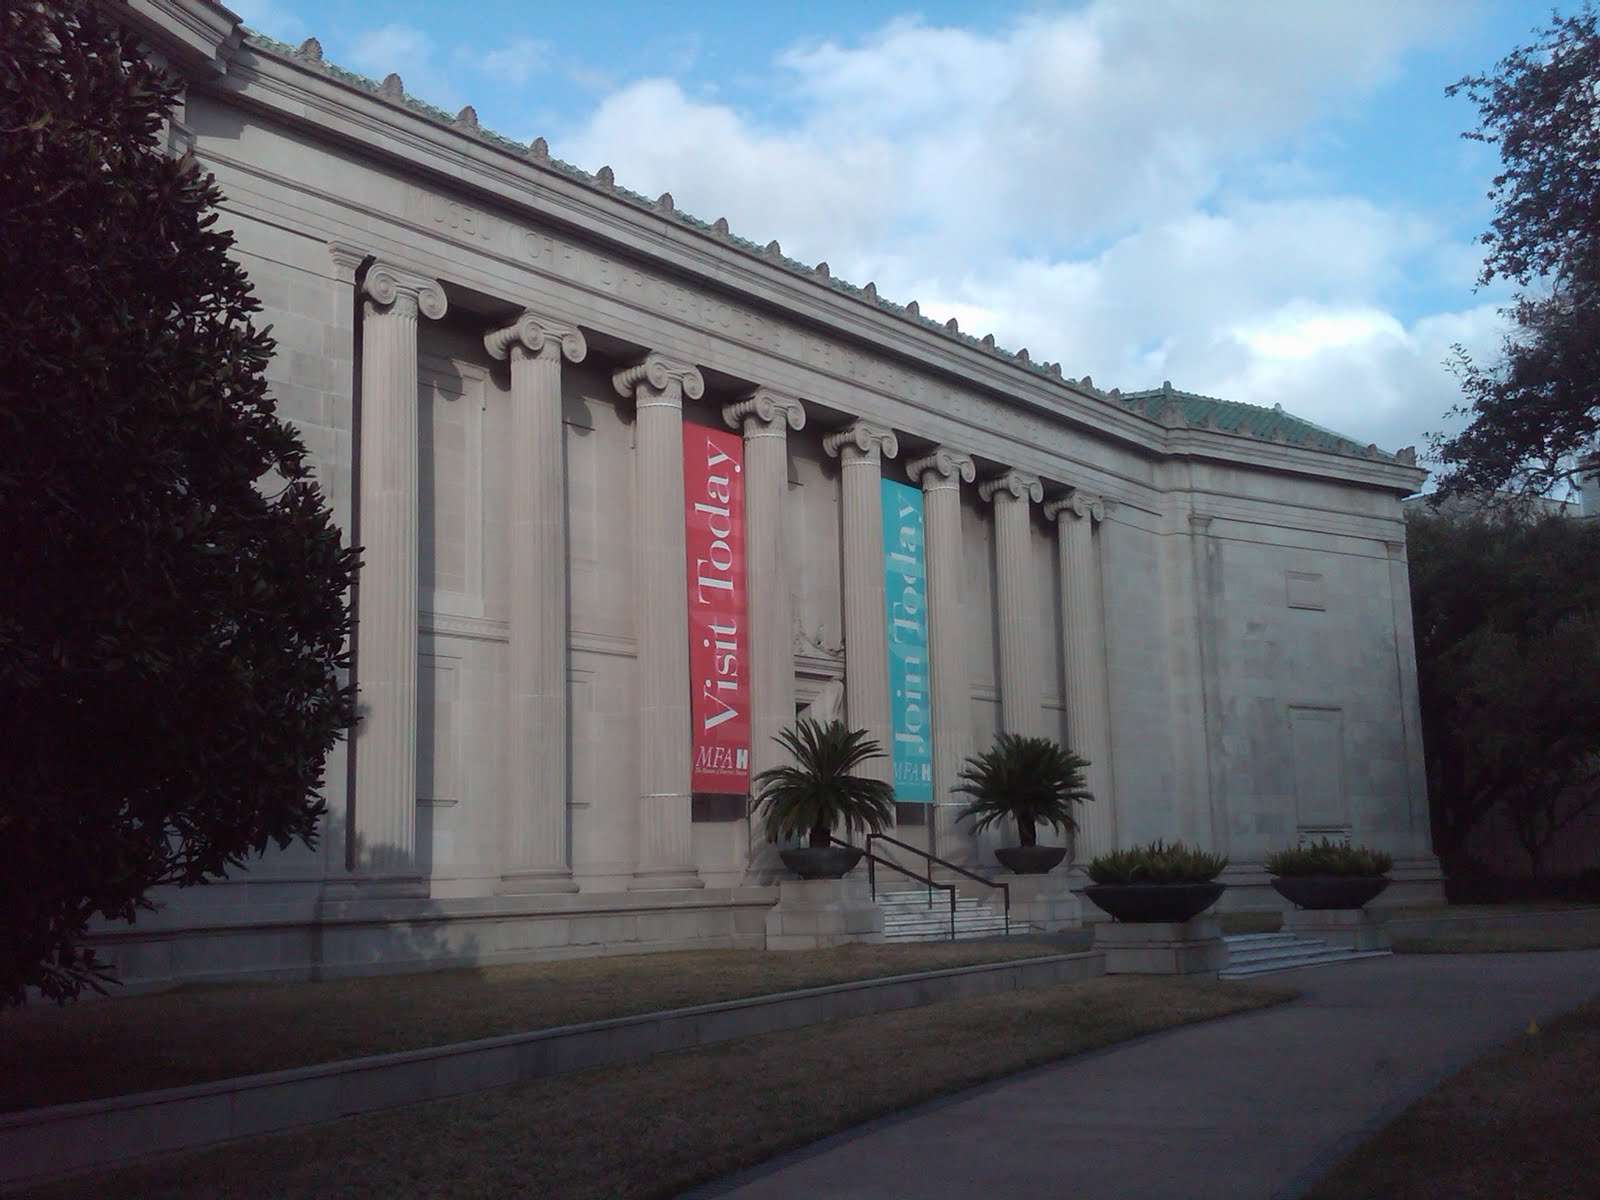 travels: Museum District, Houston, Texas